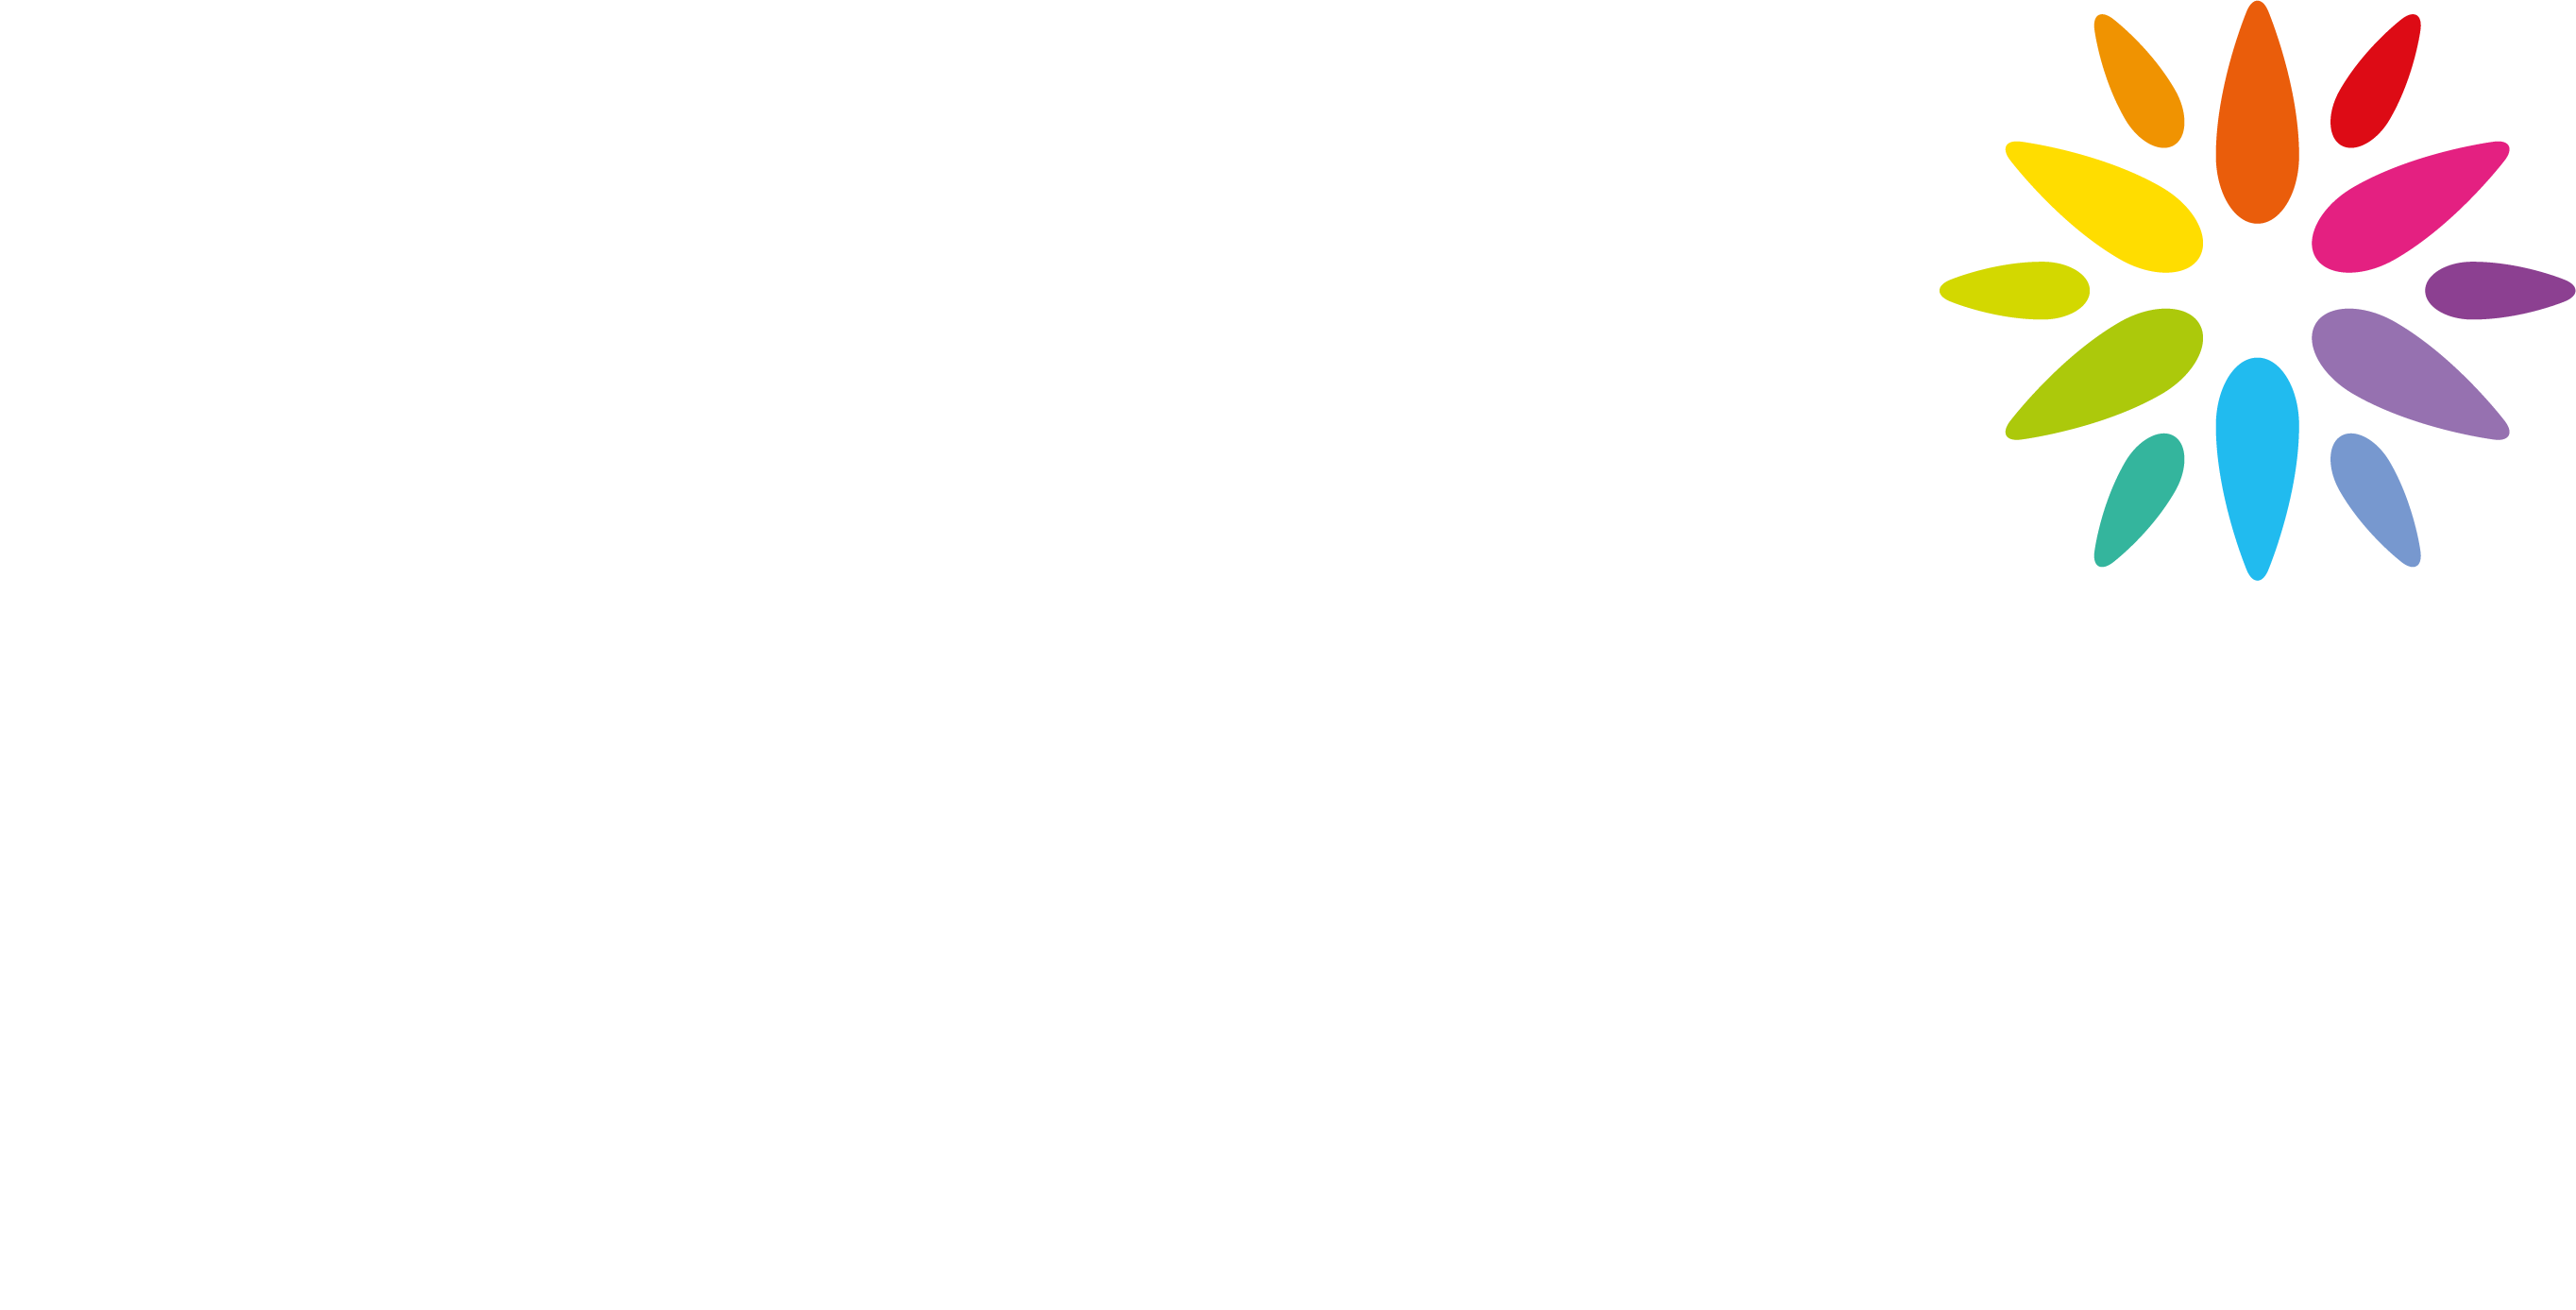 Zenith logo white out of black